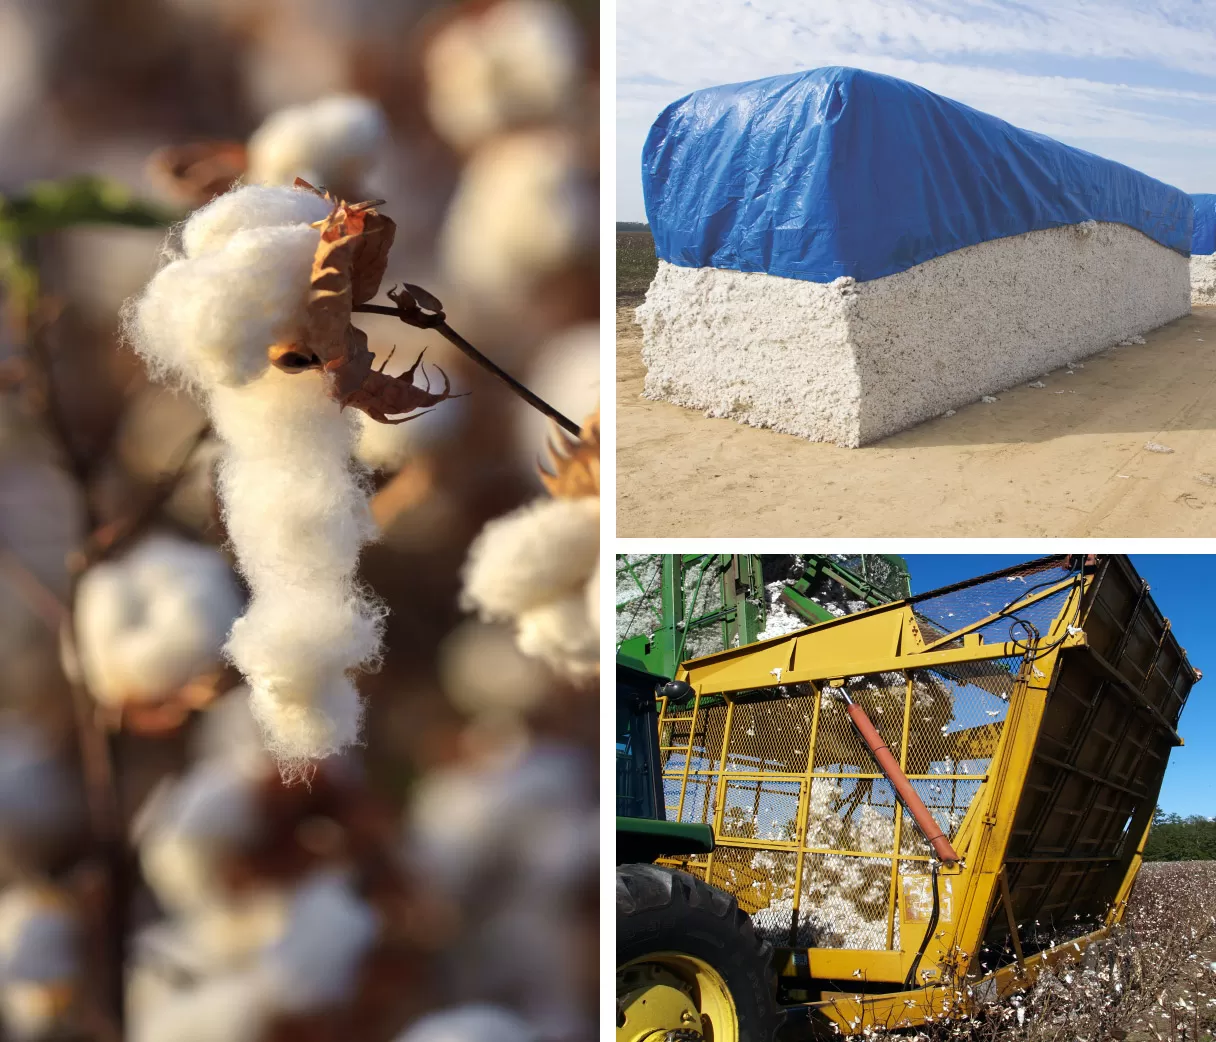 cotton harvesting